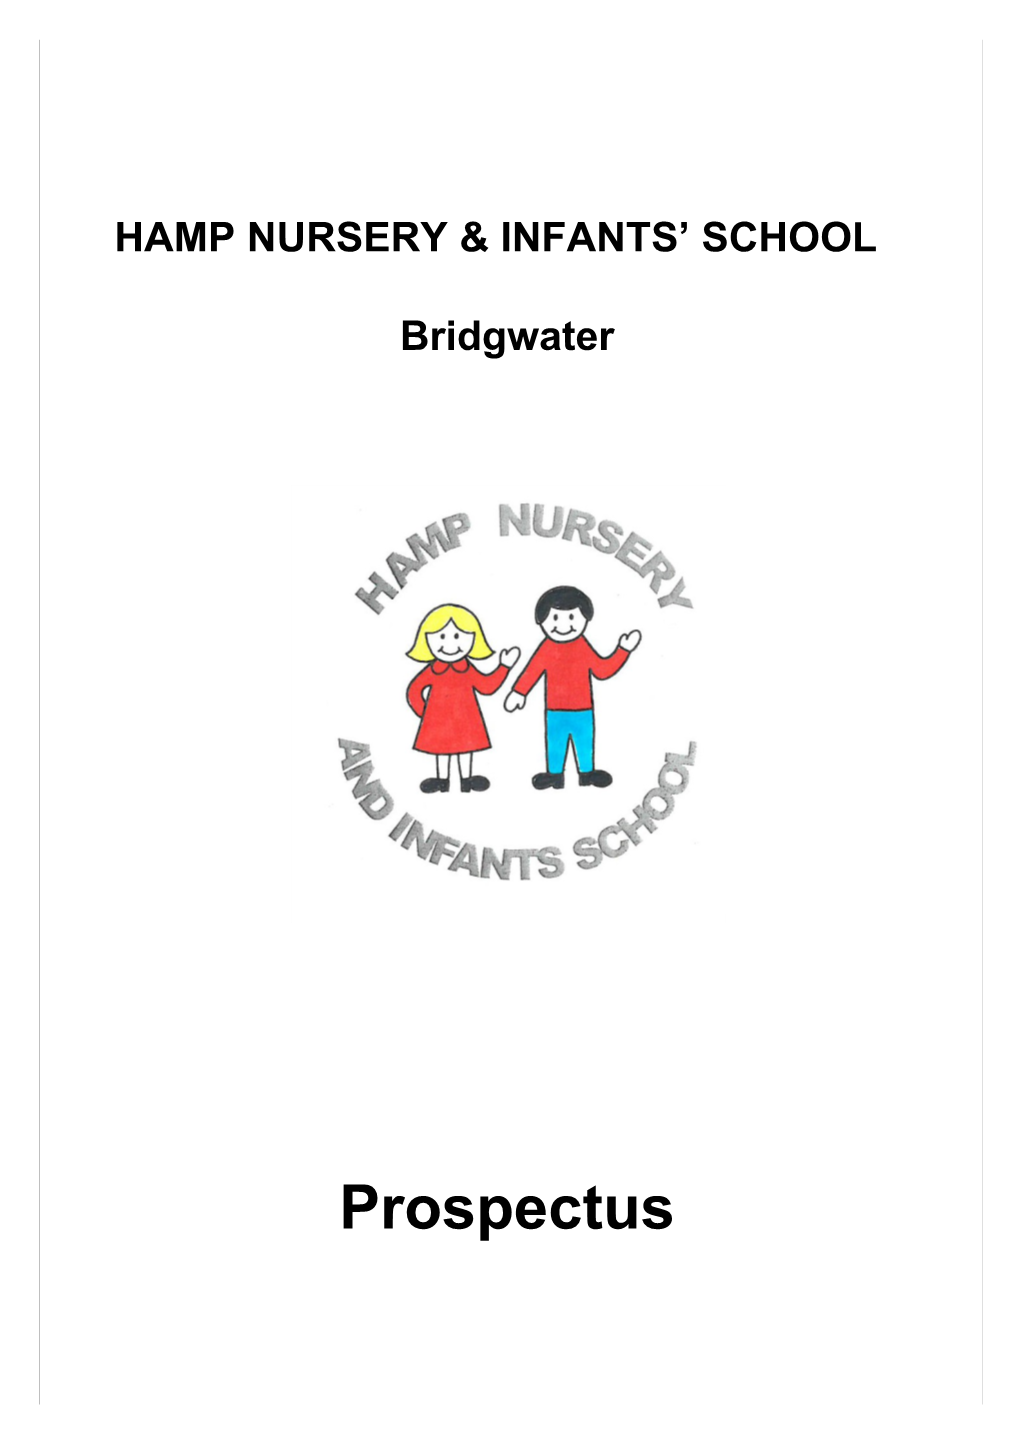 Hamp Nursery & Infants